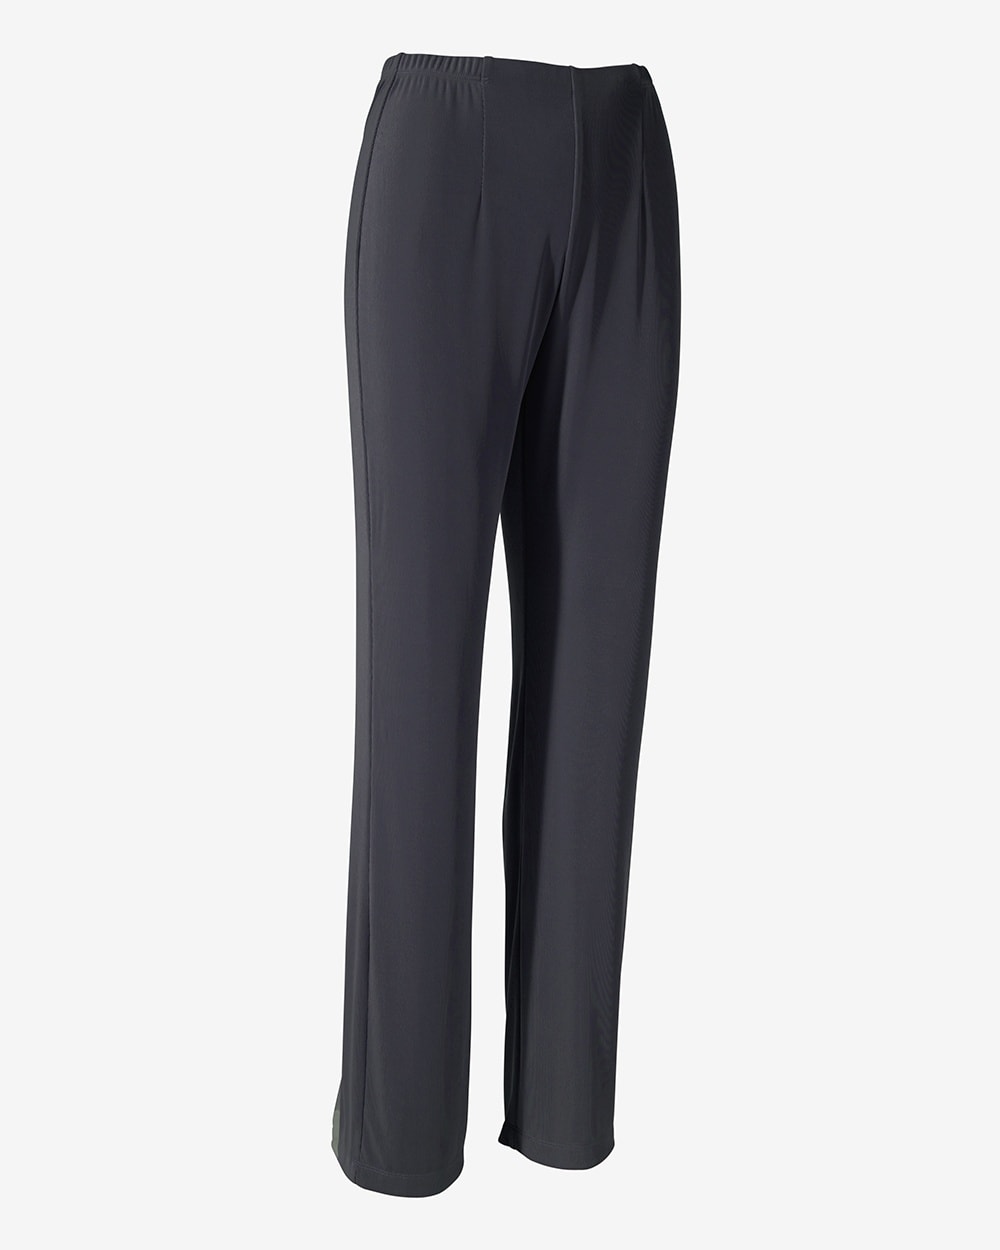 Easywear Flawless Pants Graphite Gray